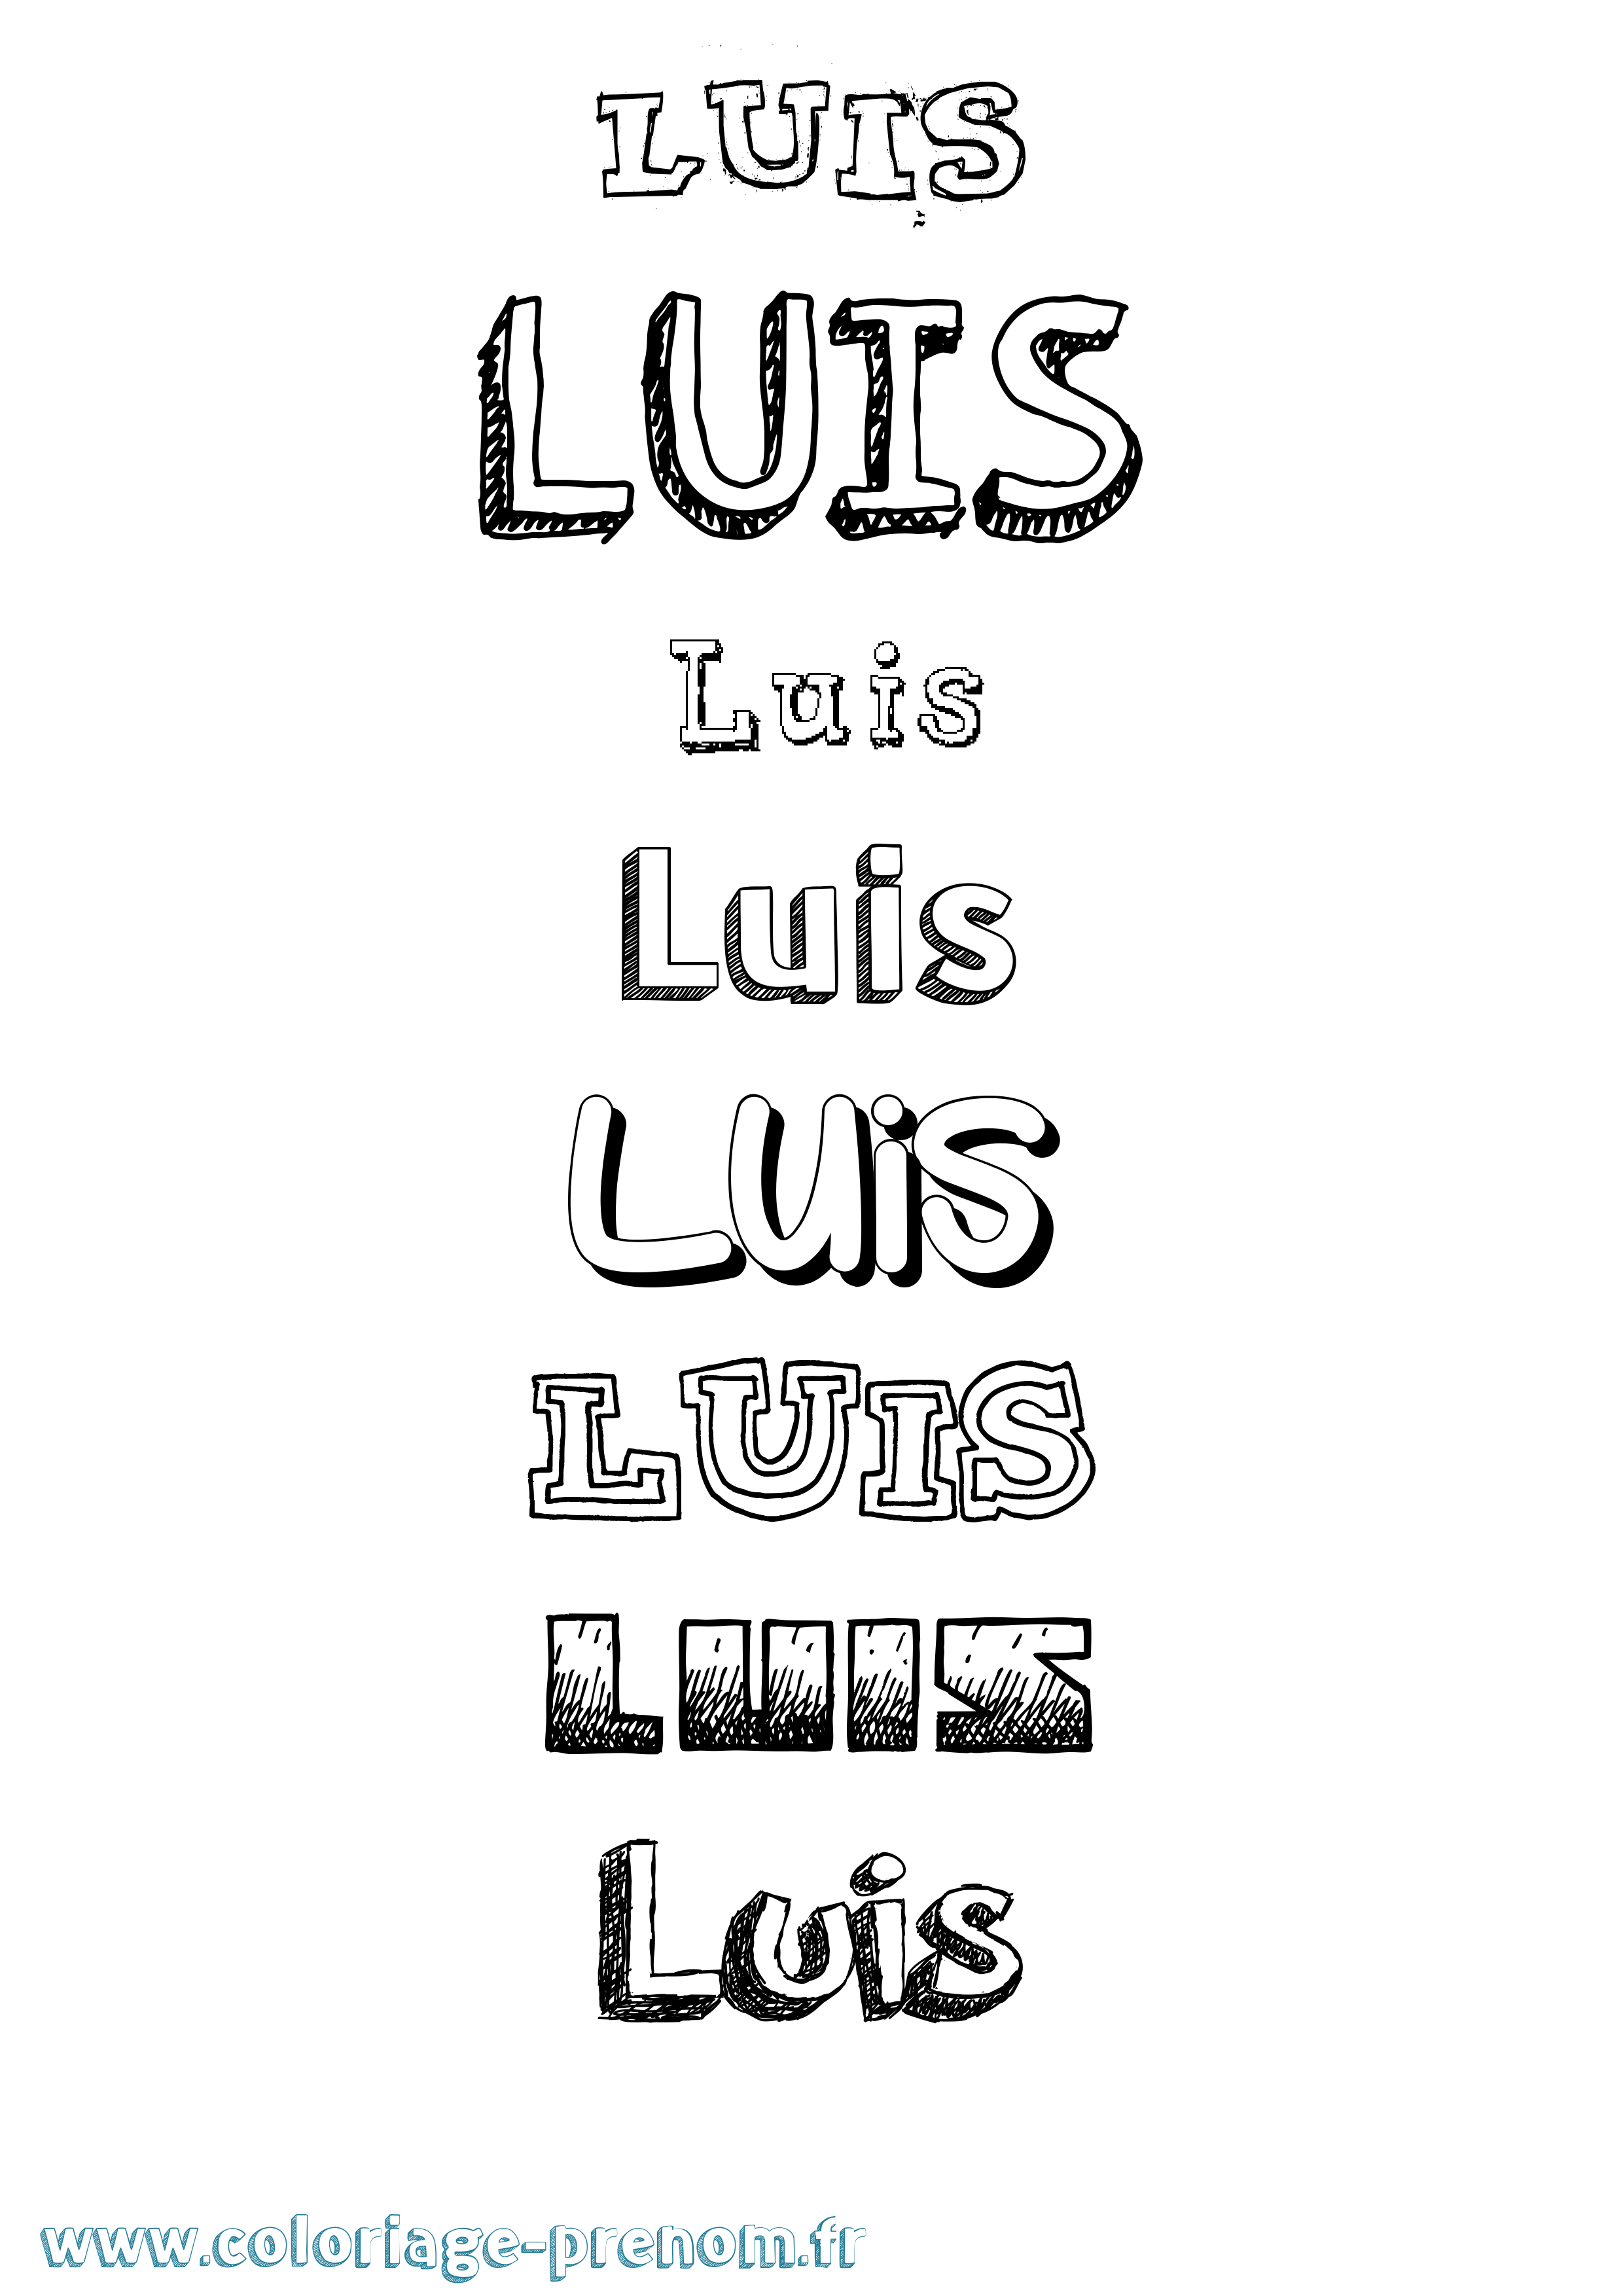 Coloriage prénom Luis